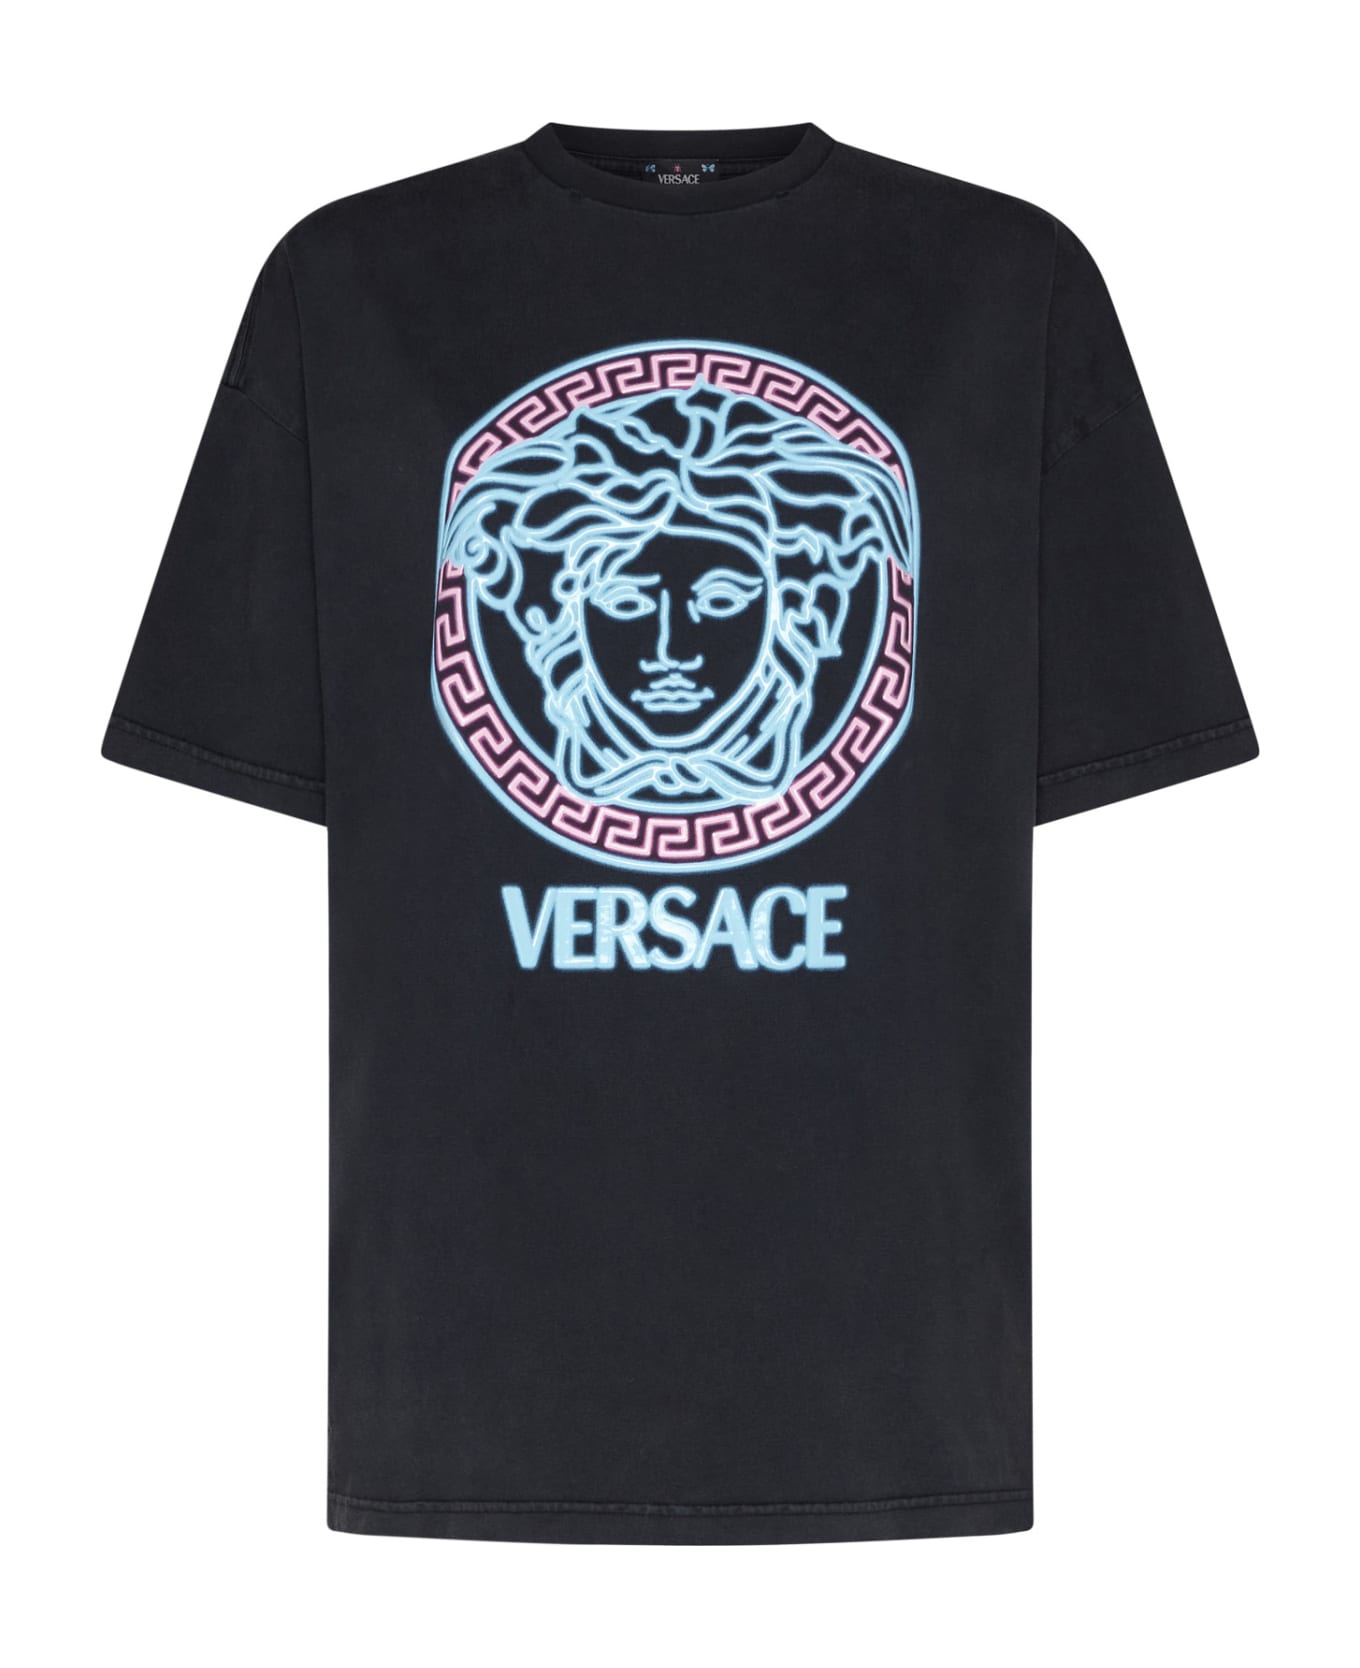 Versace T-shirt With Worn Look - Blacblack+neon azur+neon pink Tシャツ